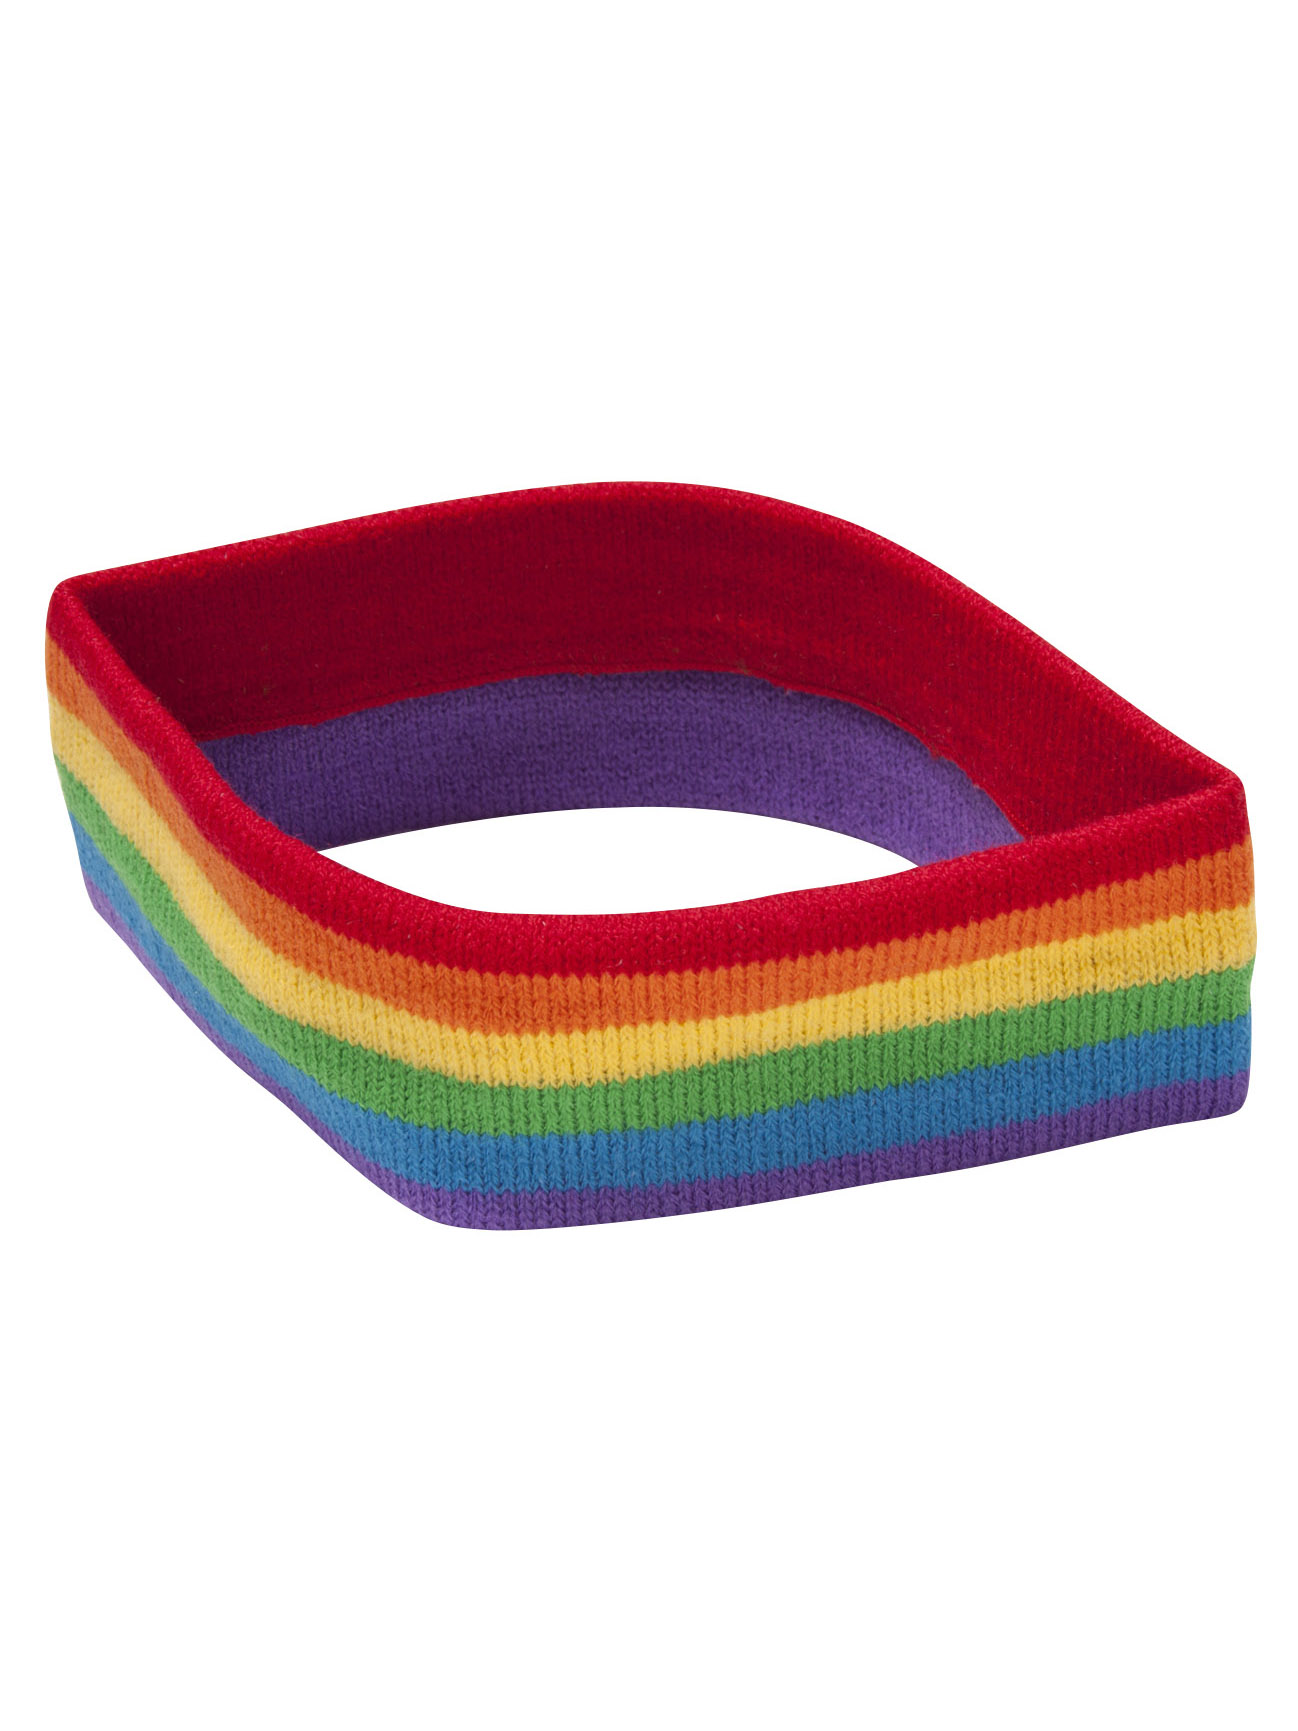 Equality Pride Kit - Headband + Wristbands - image 2 of 4